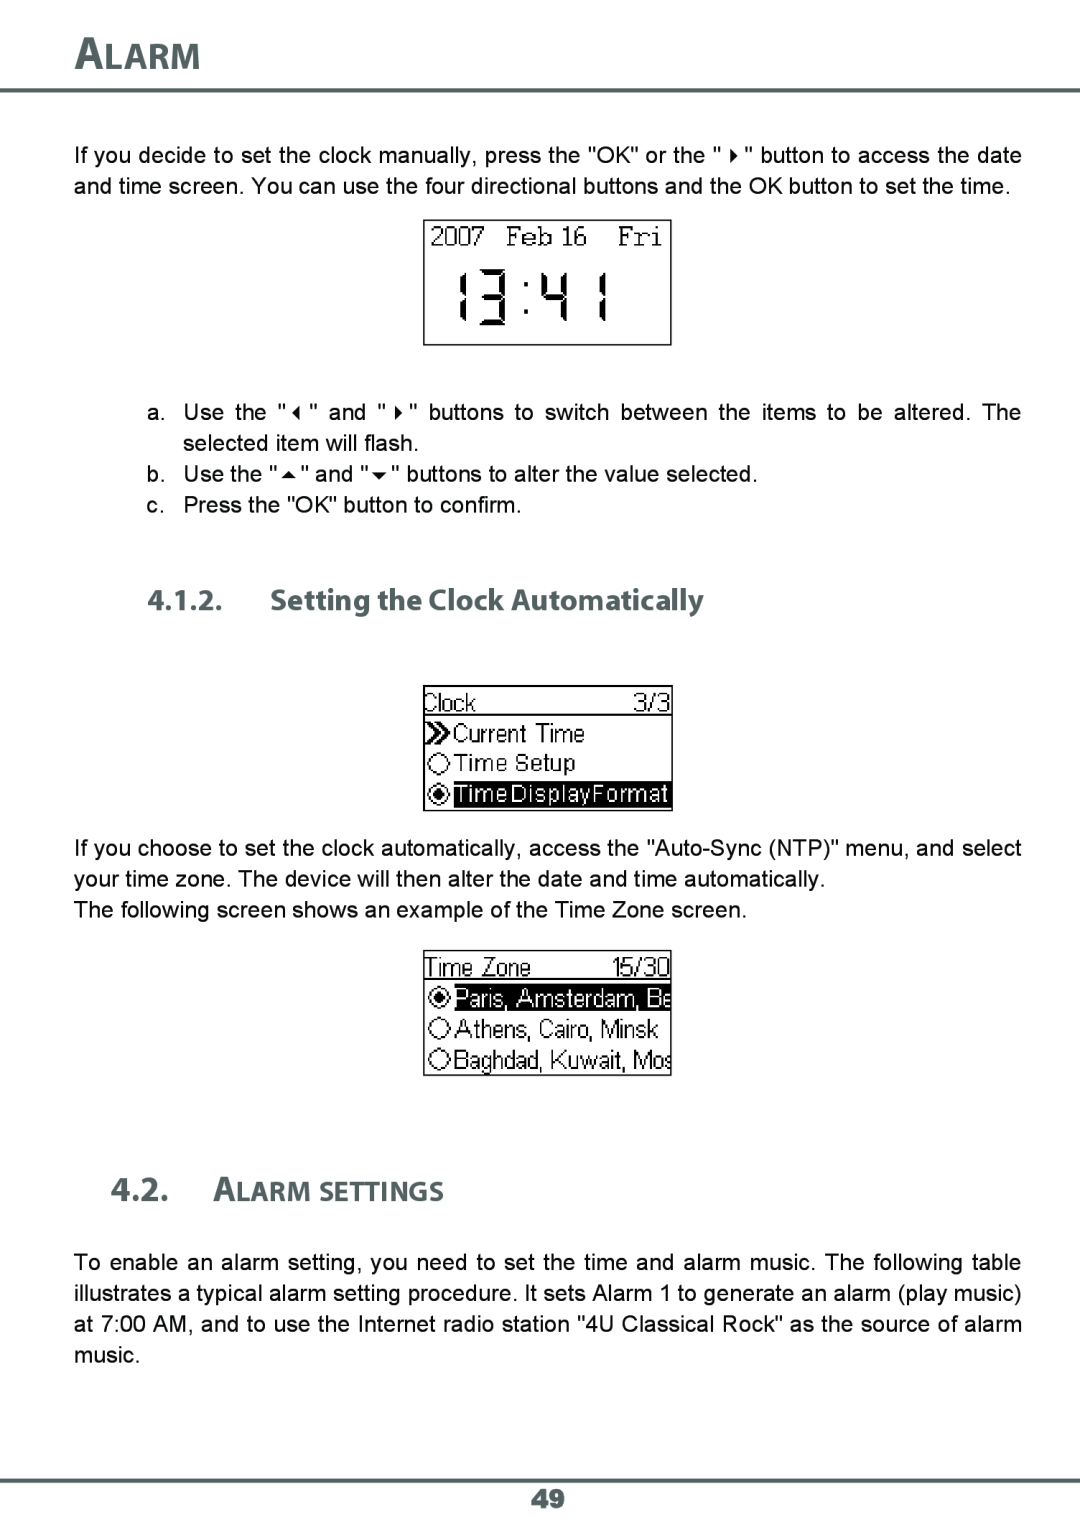 Sagem 700 manual Setting the Clock Automatically, Alarm Settings 